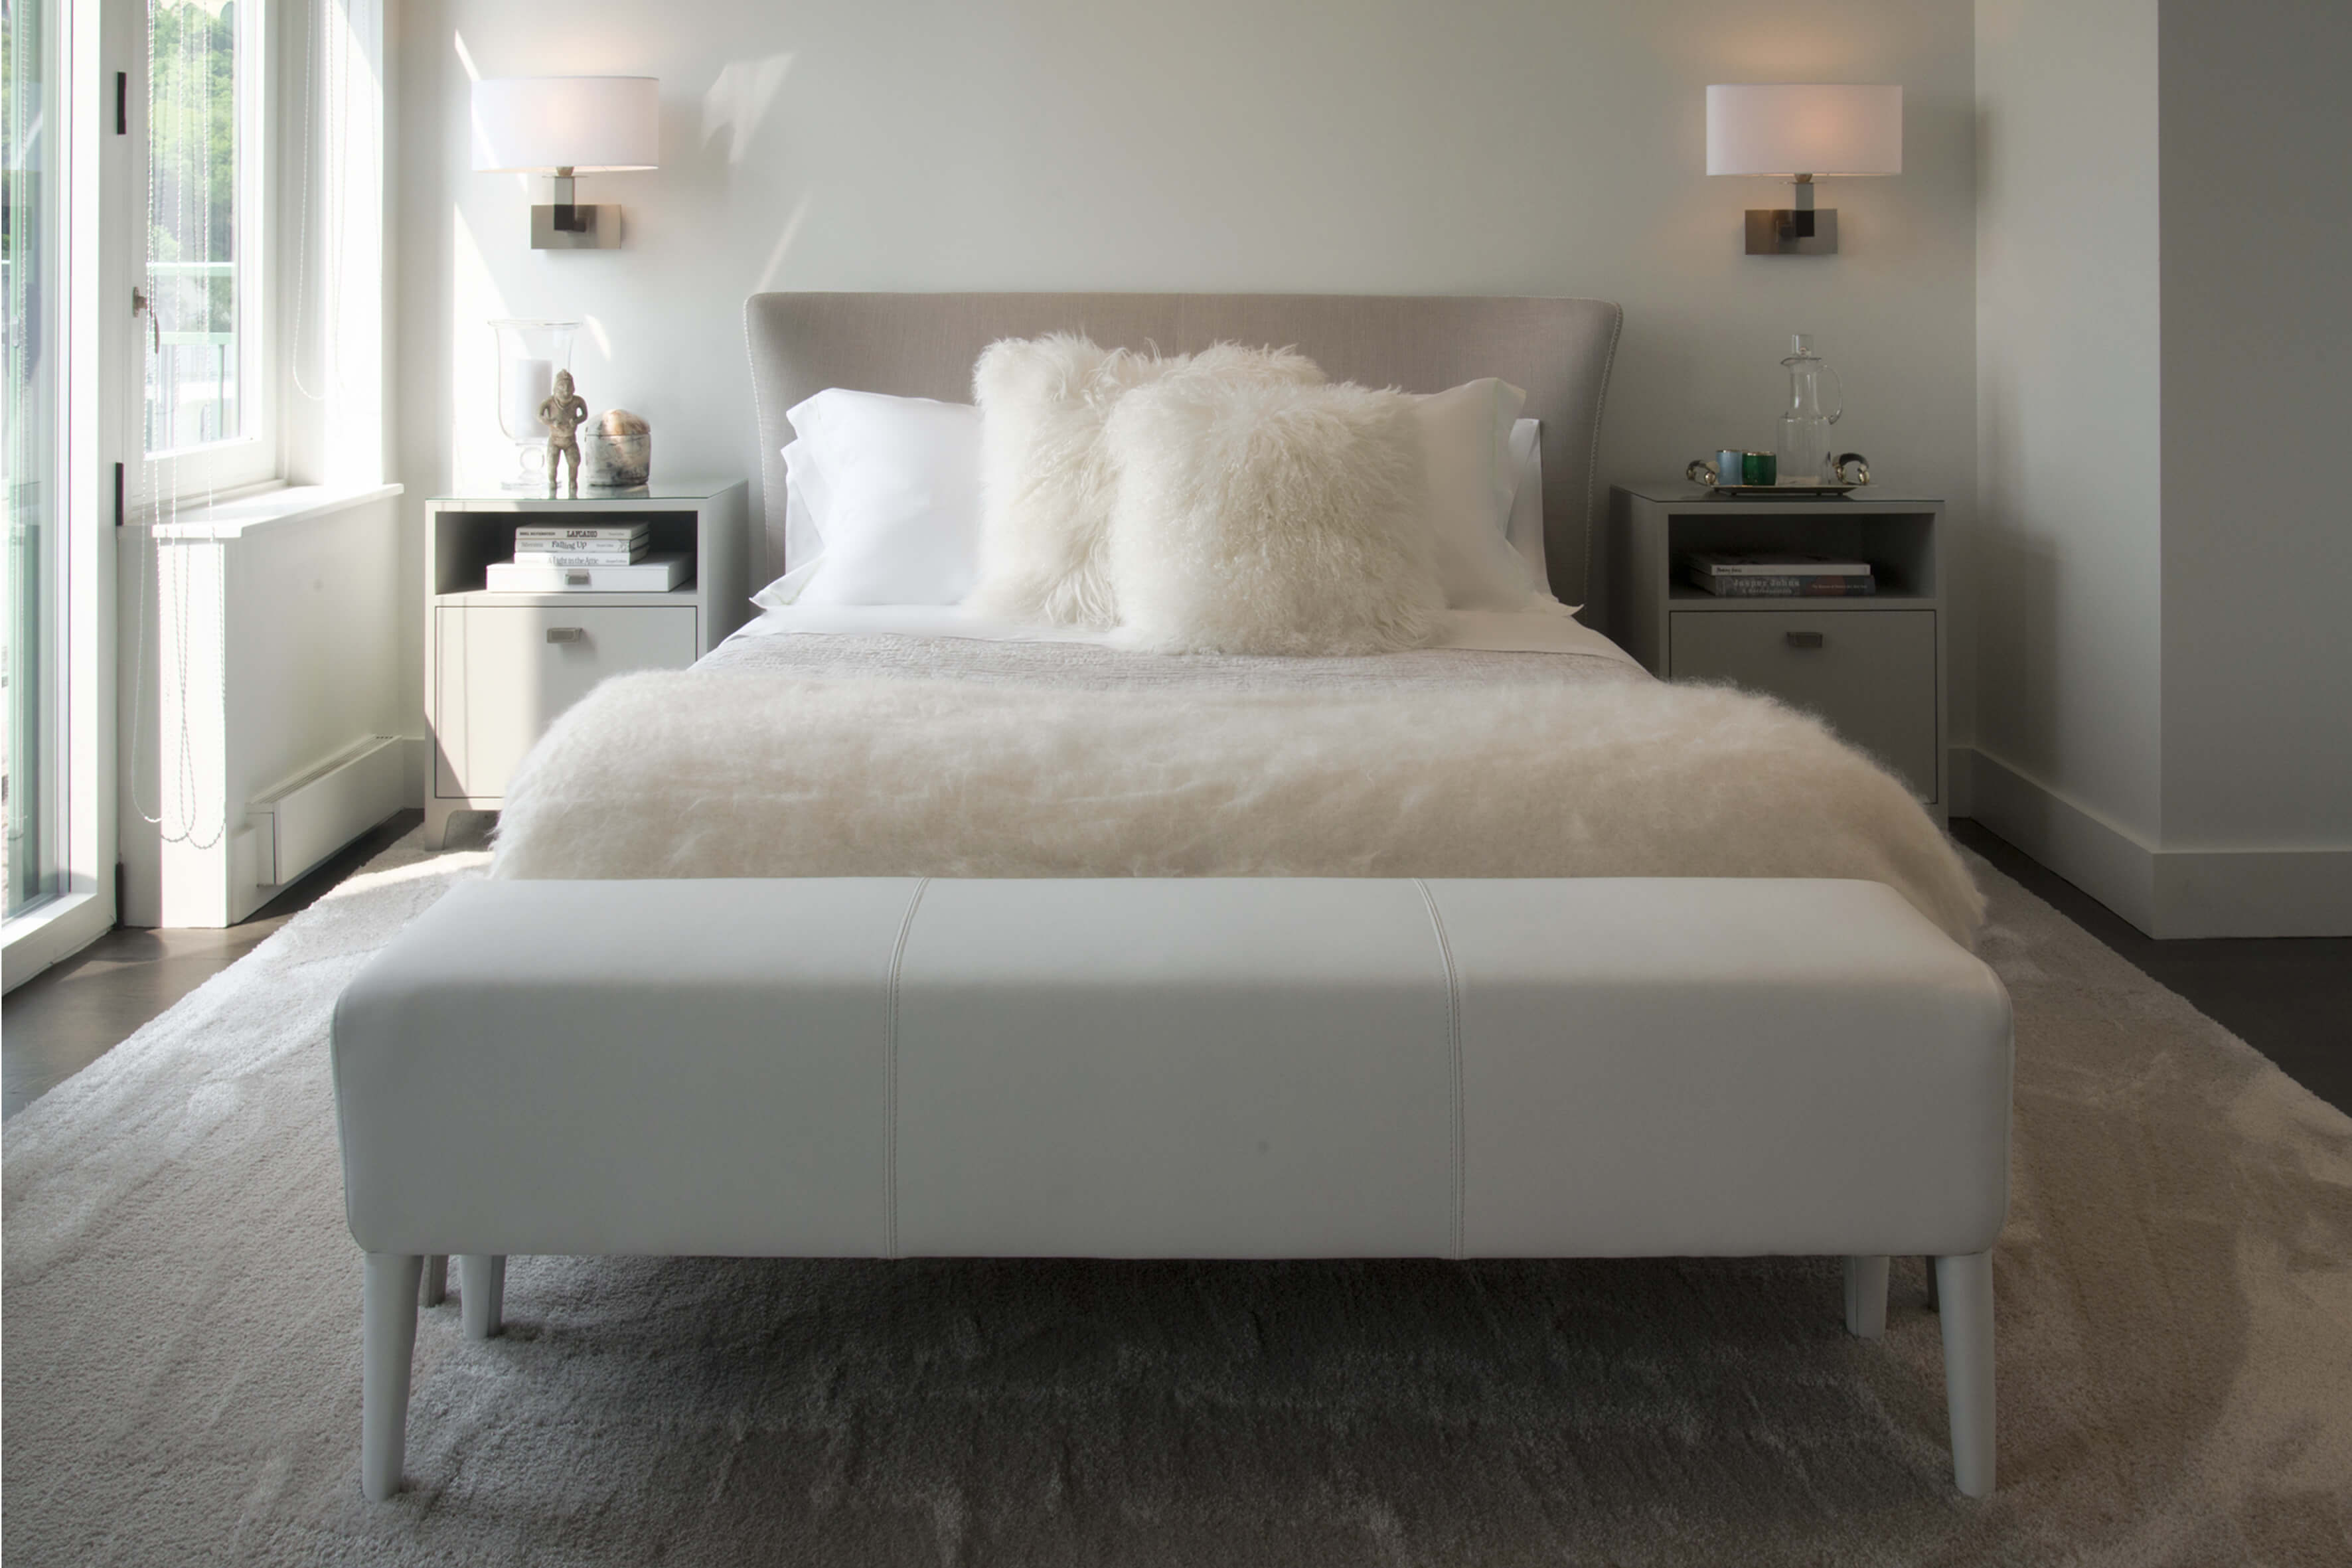 Plush, modern, and inviting bedroom designed by Cincinnati's premiere contemporary interior designer, RM Interiors.